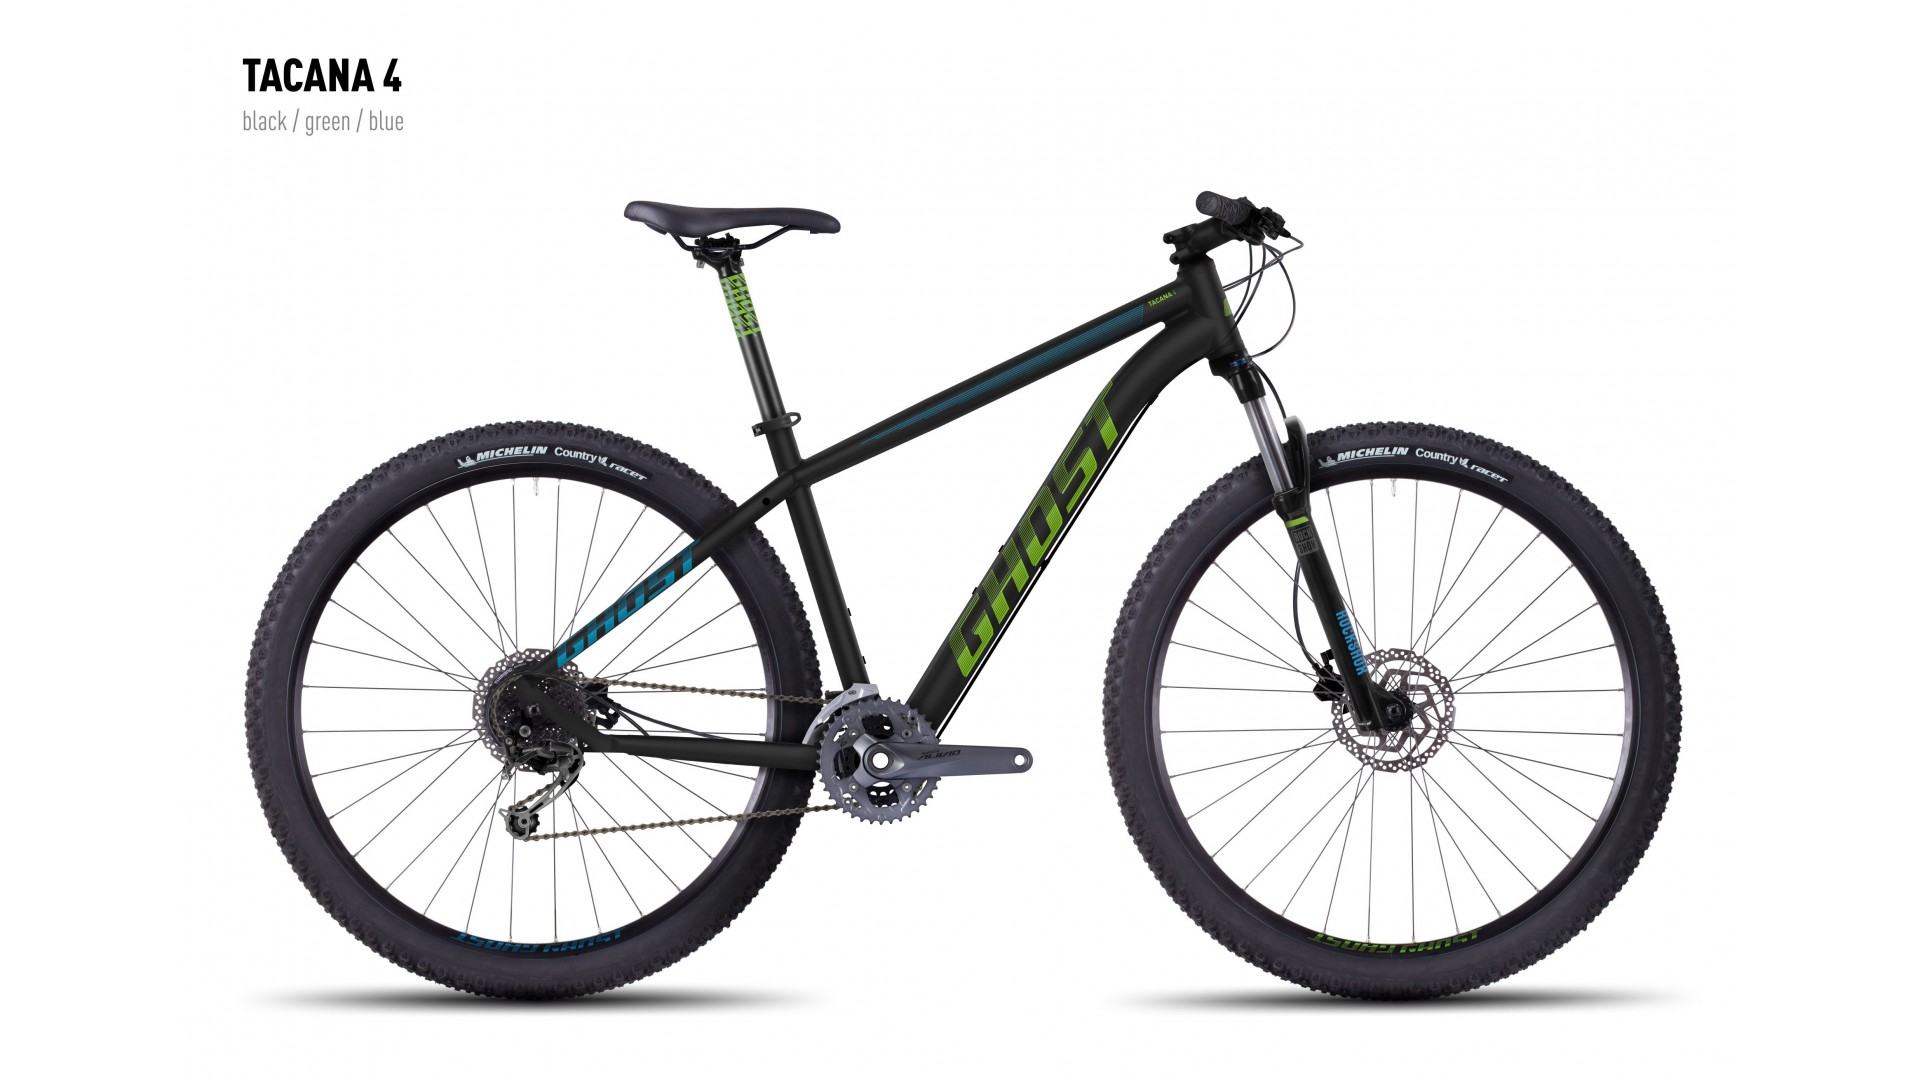 Велосипед GHOST Tacana 4 black/green/blue год 2016